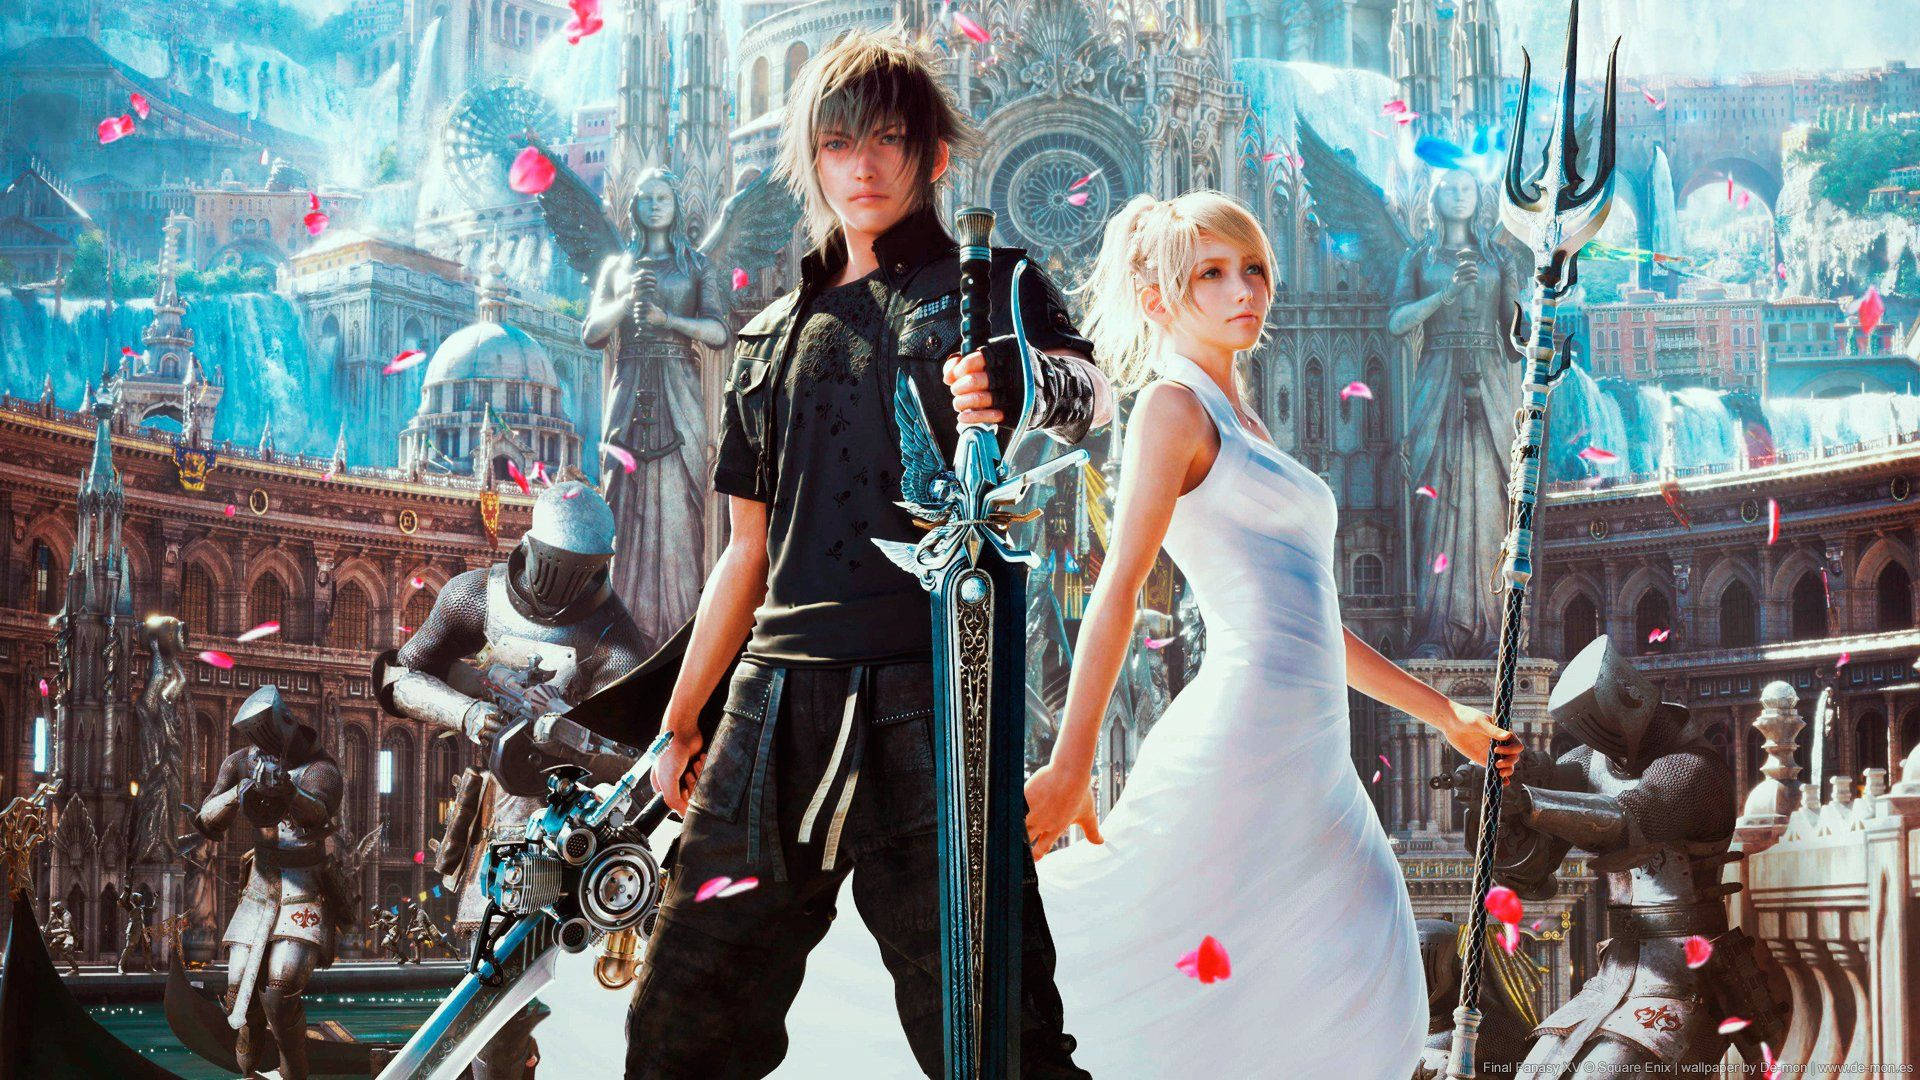 Free Final Fantasy Wallpaper Downloads, Final Fantasy Wallpaper for FREE